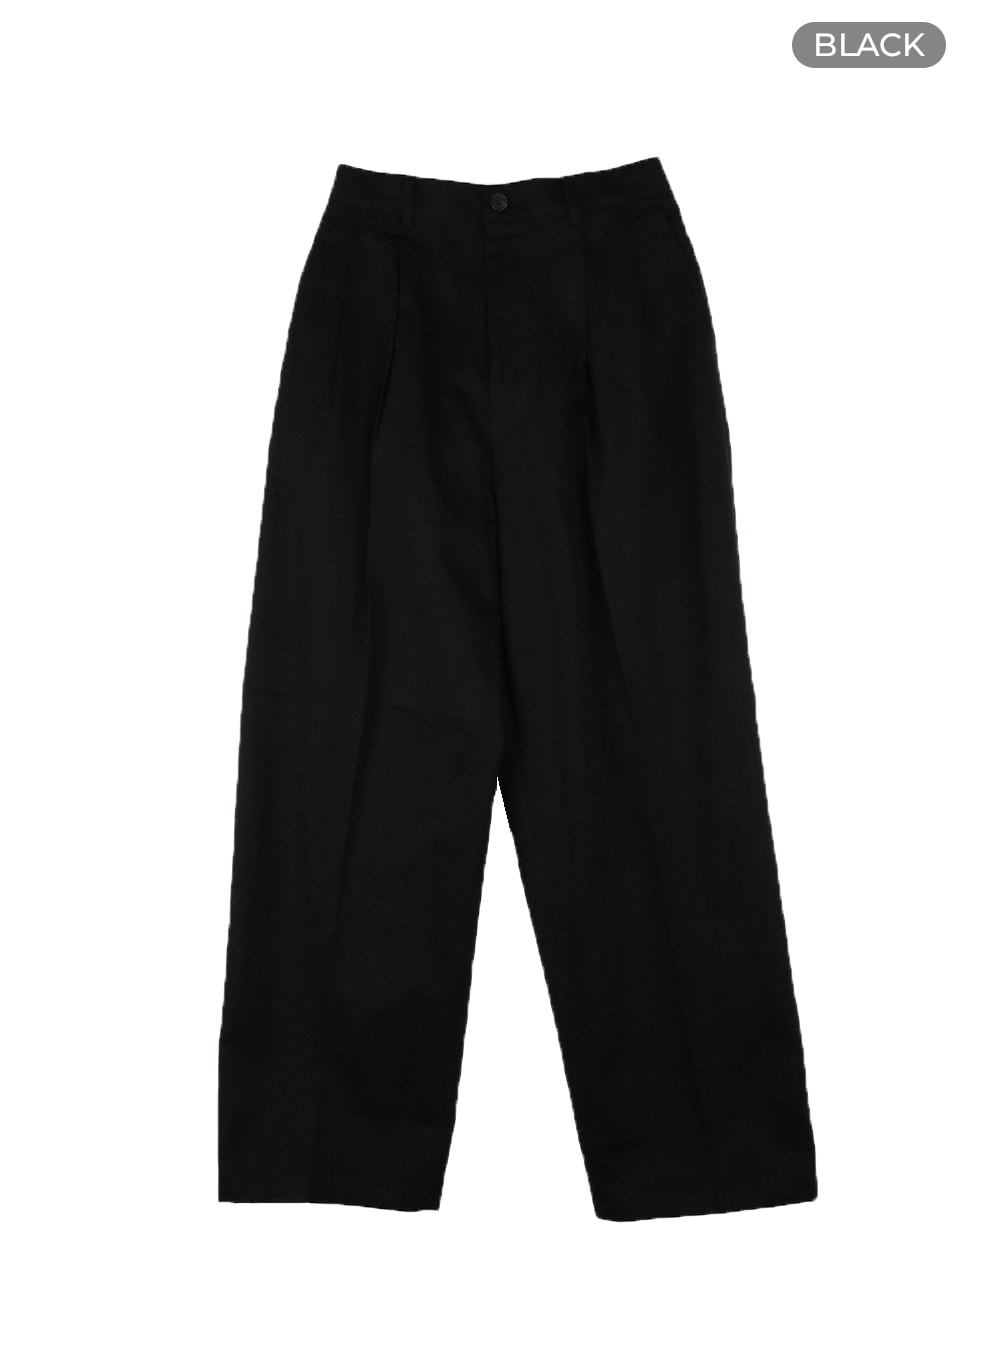 mens-wide-fit-cotton-trousers-ia401 / Black